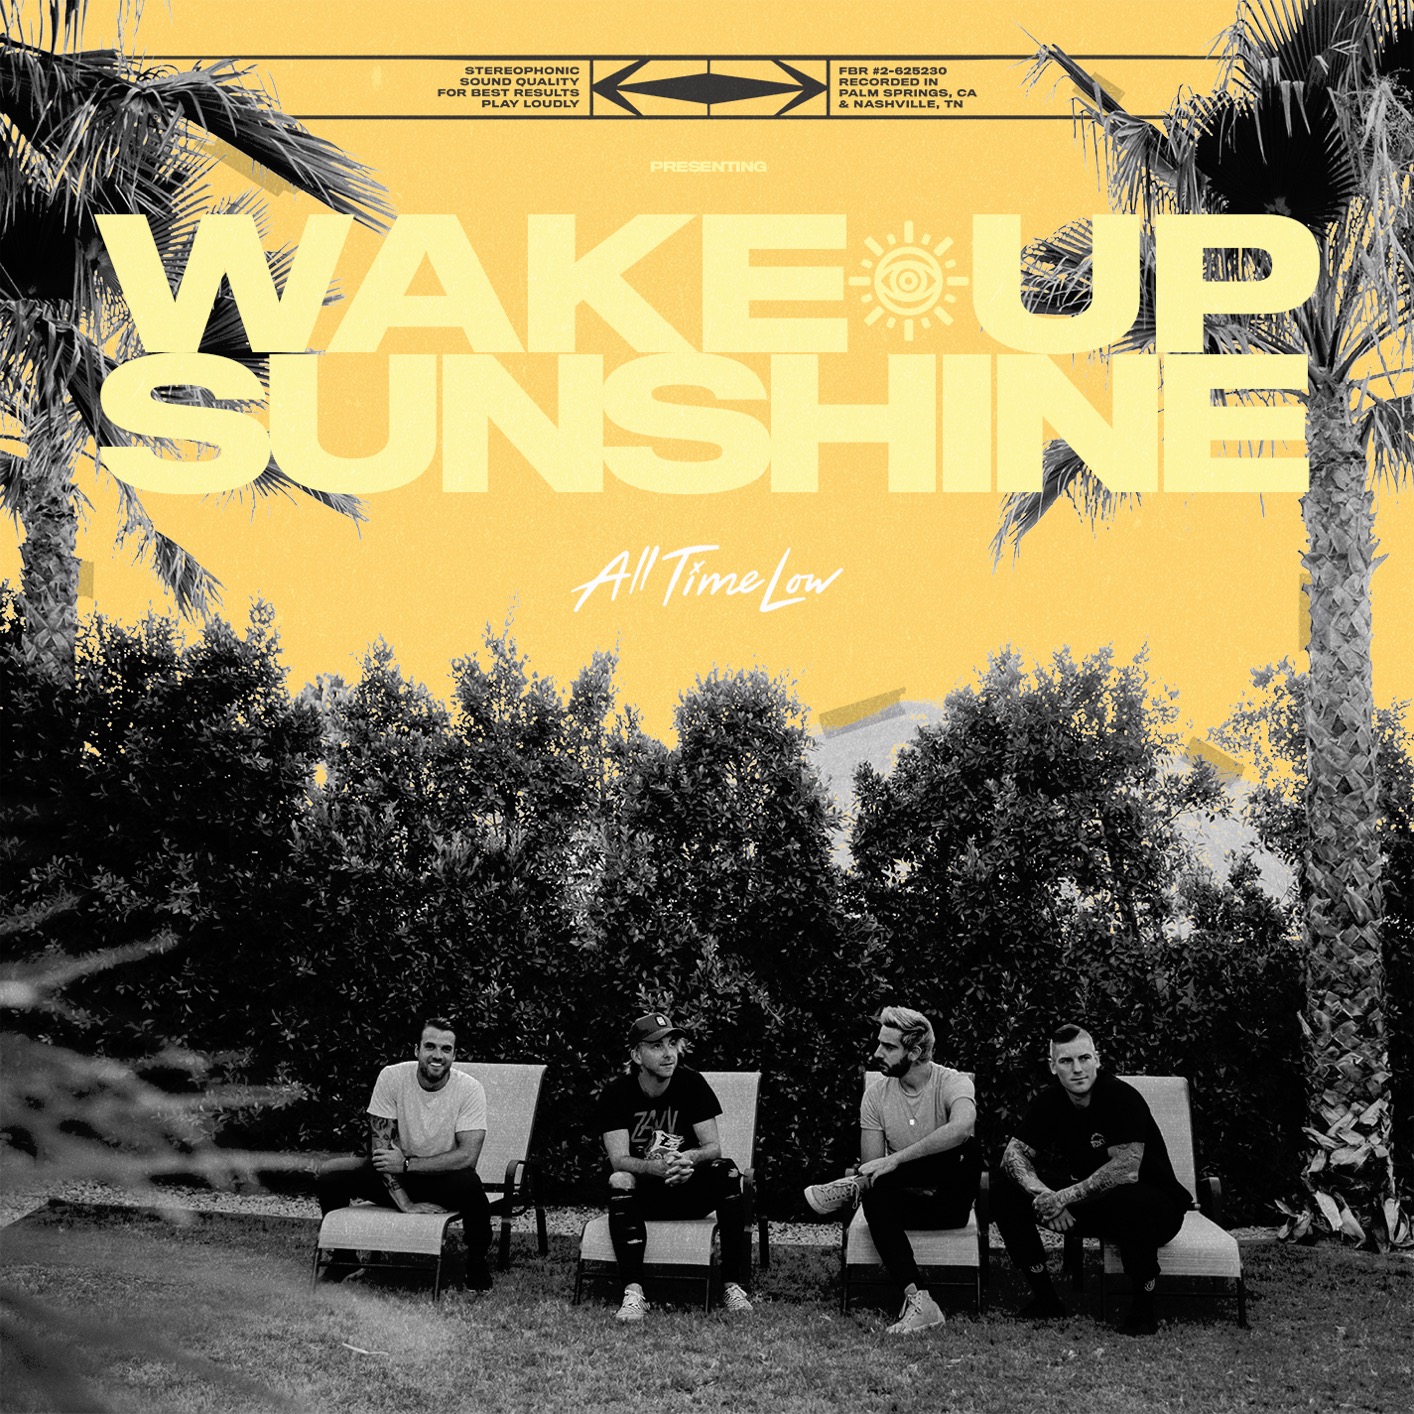 All Time Low - Wake Up, Sunshine (2020) [FLAC 24bit/48kHz]